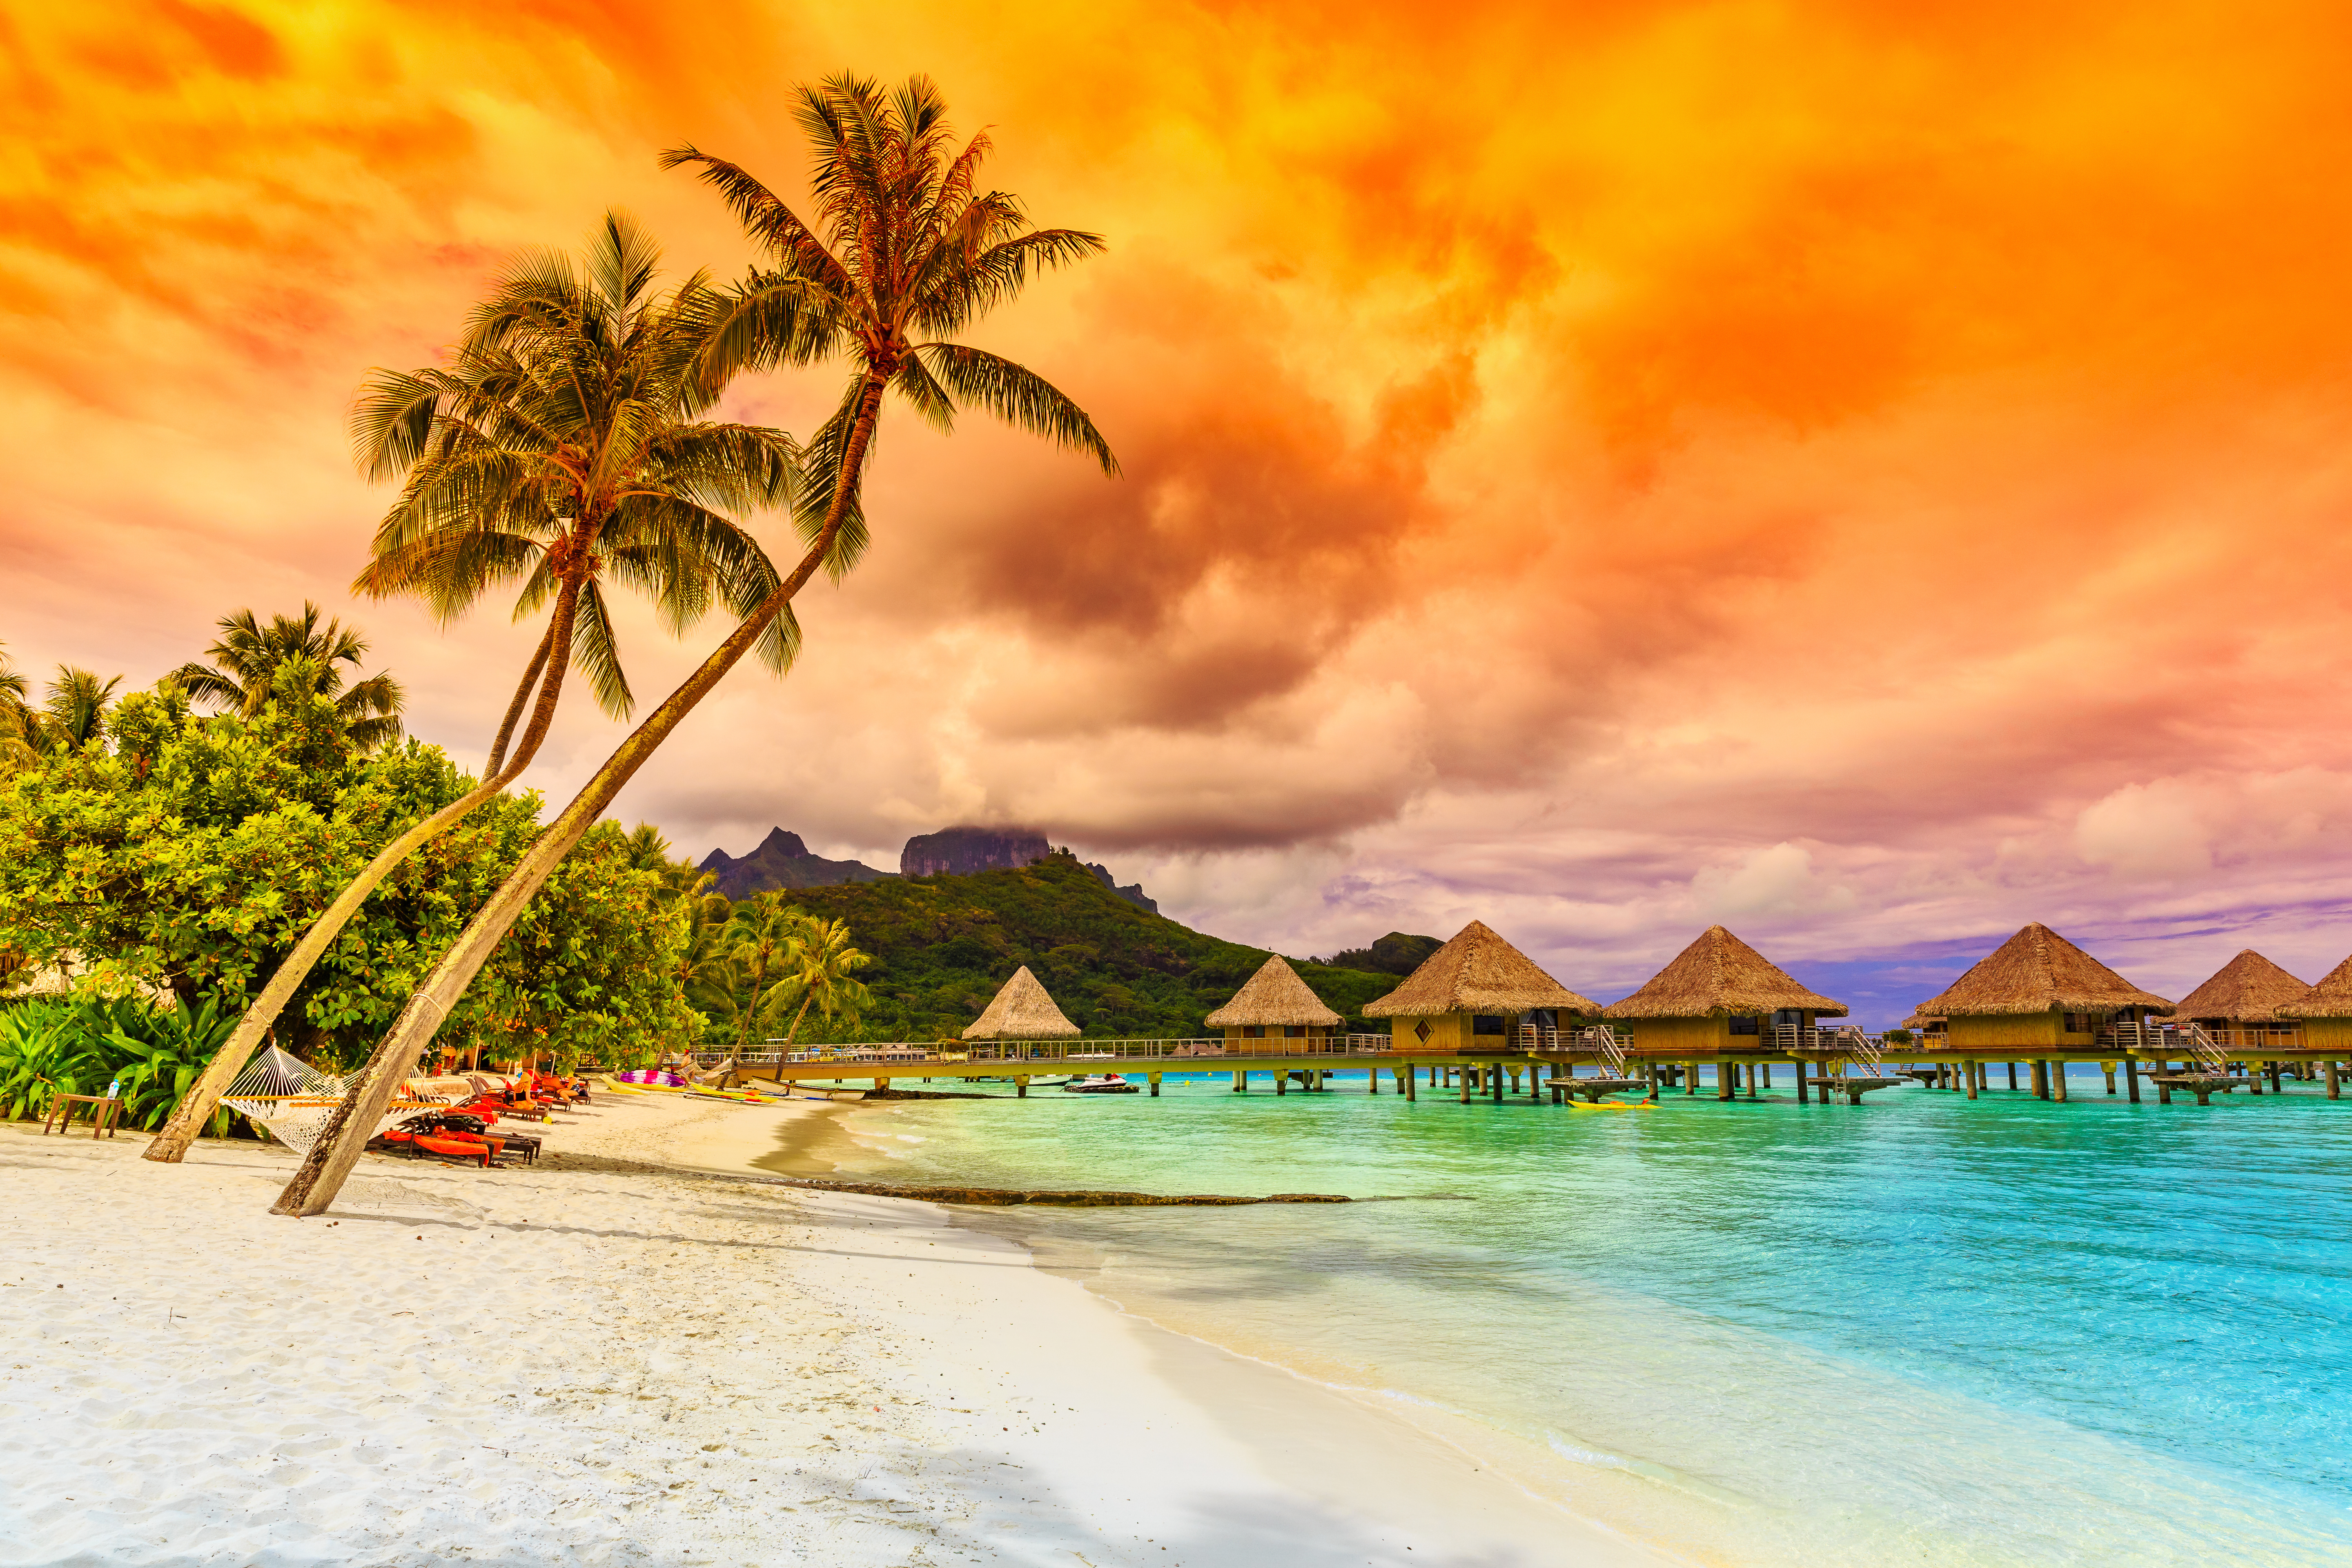 hut, beach, tropical, sand, photography, cloud, holiday, palm tree